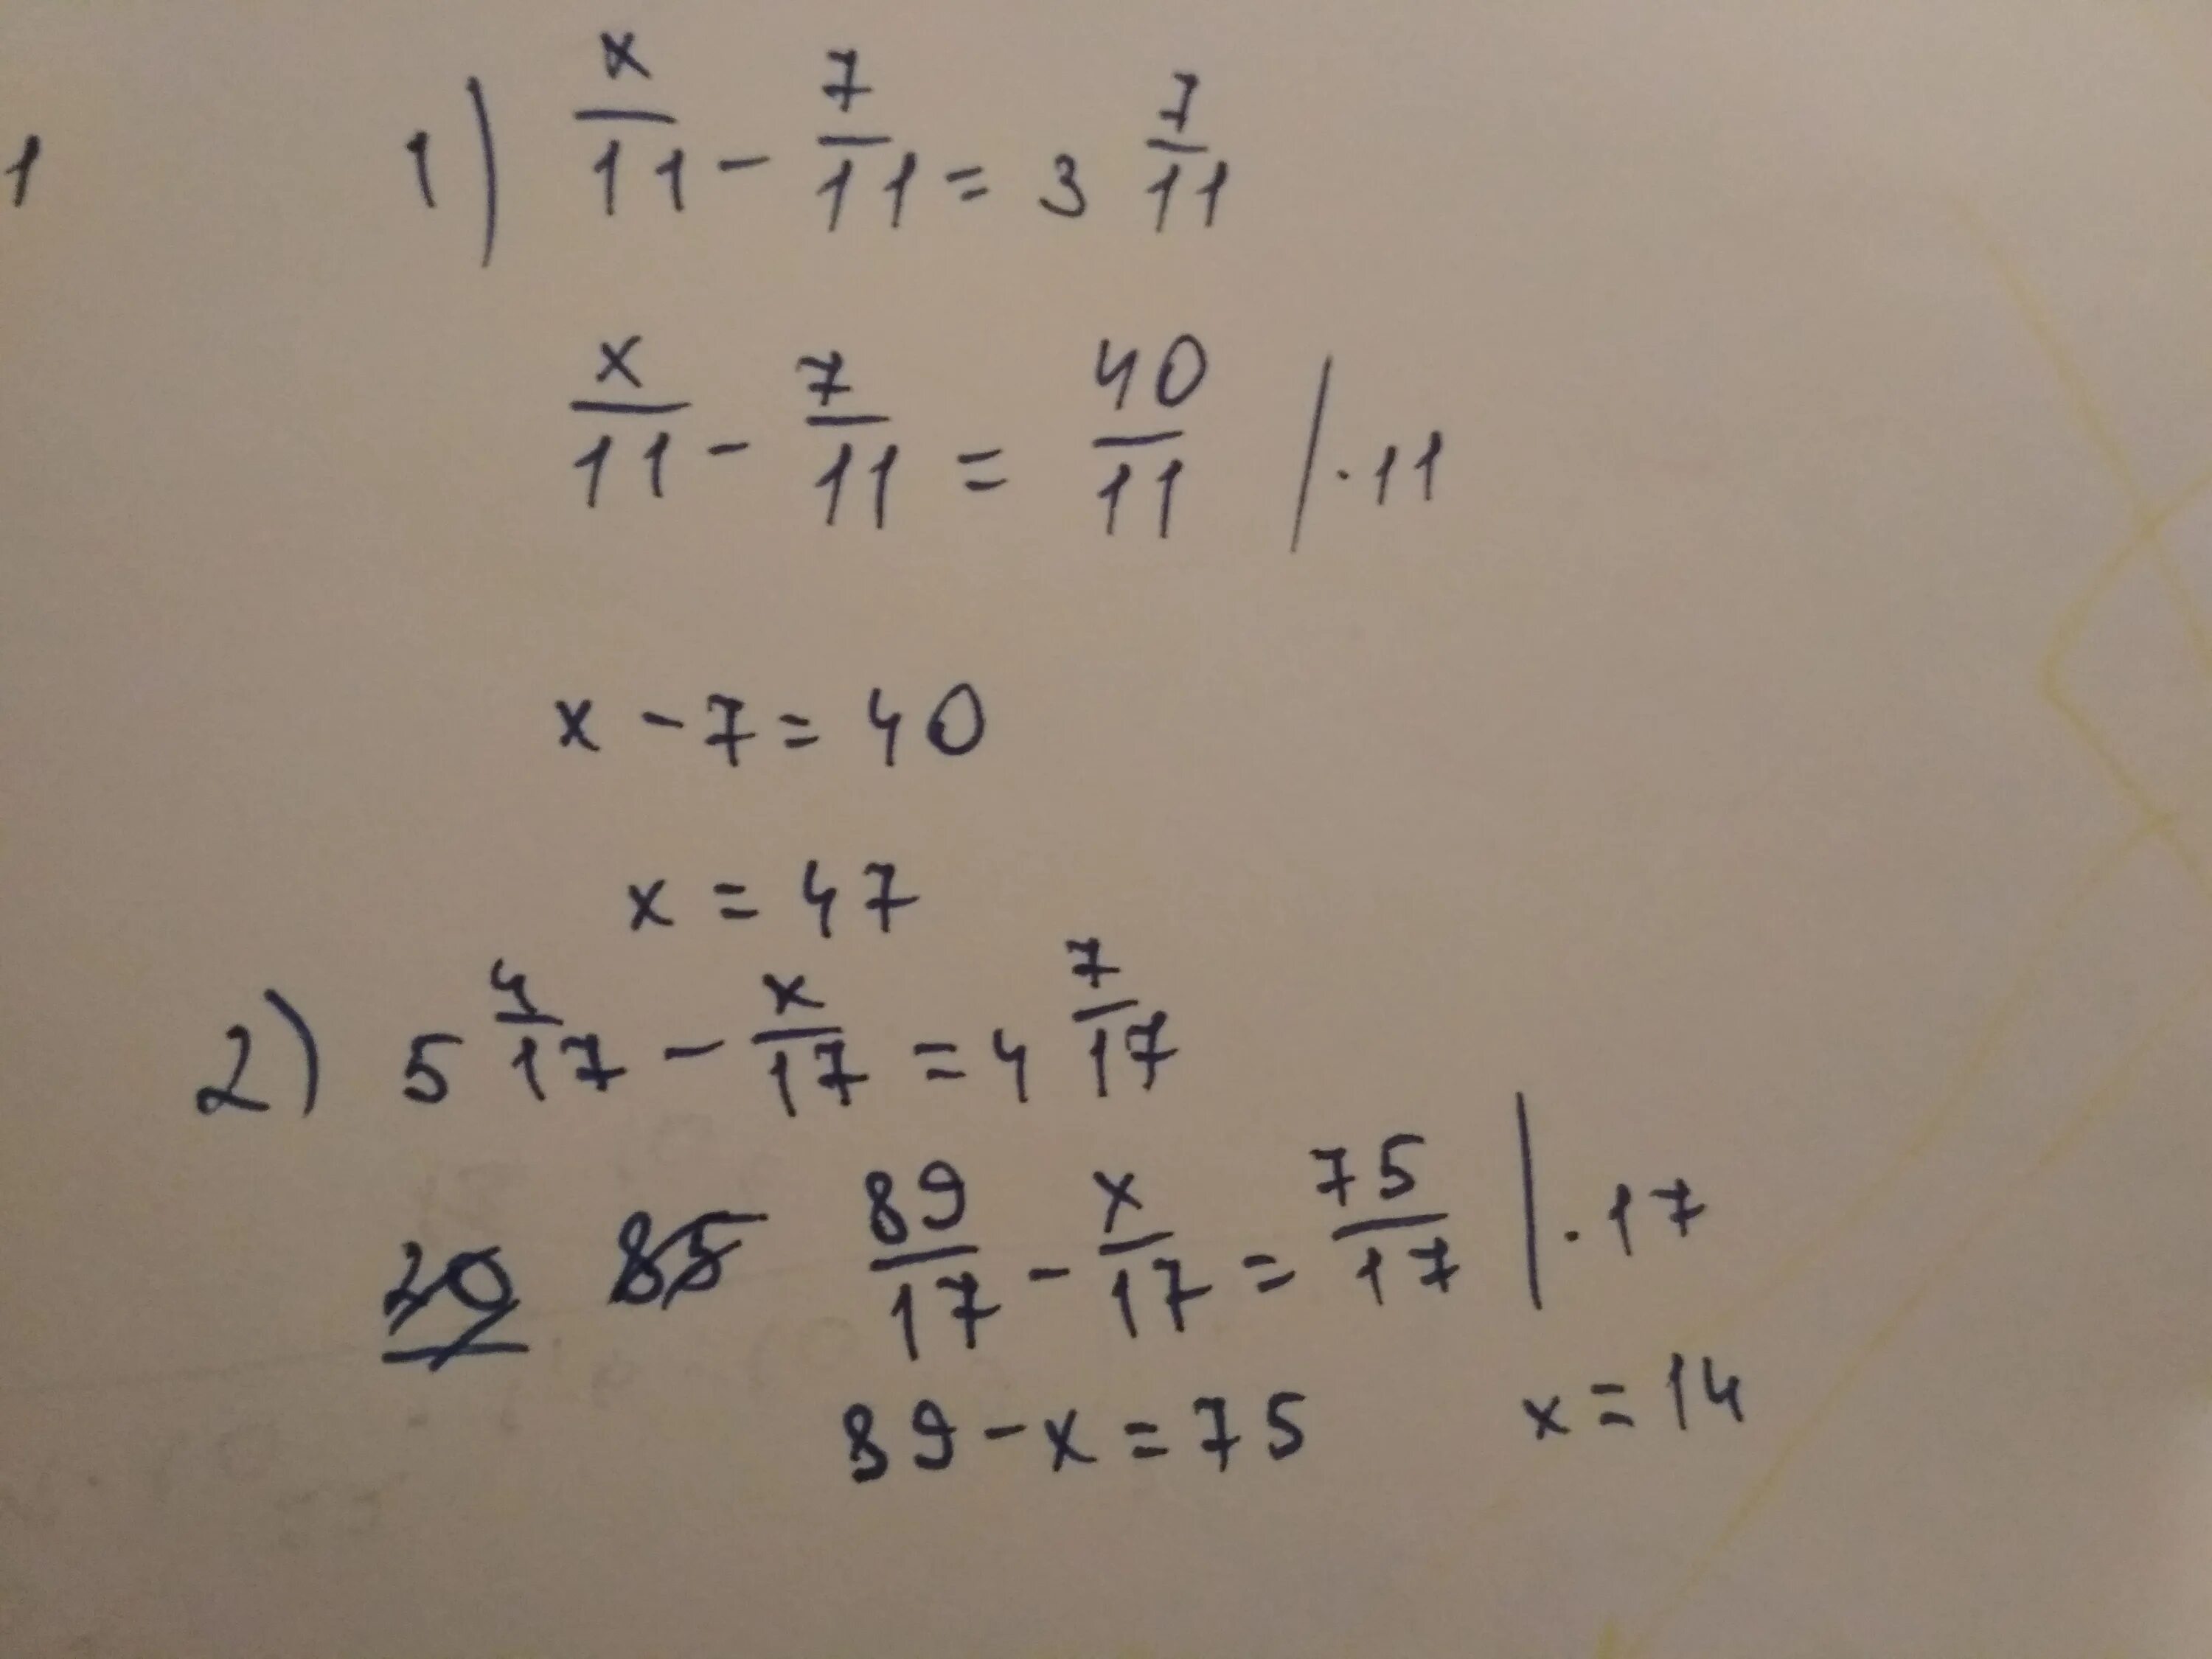 11/Х+4 -11/7. Х-У=7 Х+У=11. Реши уравнение 5:( 2 целых 1/2+x)= 5целых 3/4. -7/11х=1 3/11. Реши уравнение 7 x 13 0